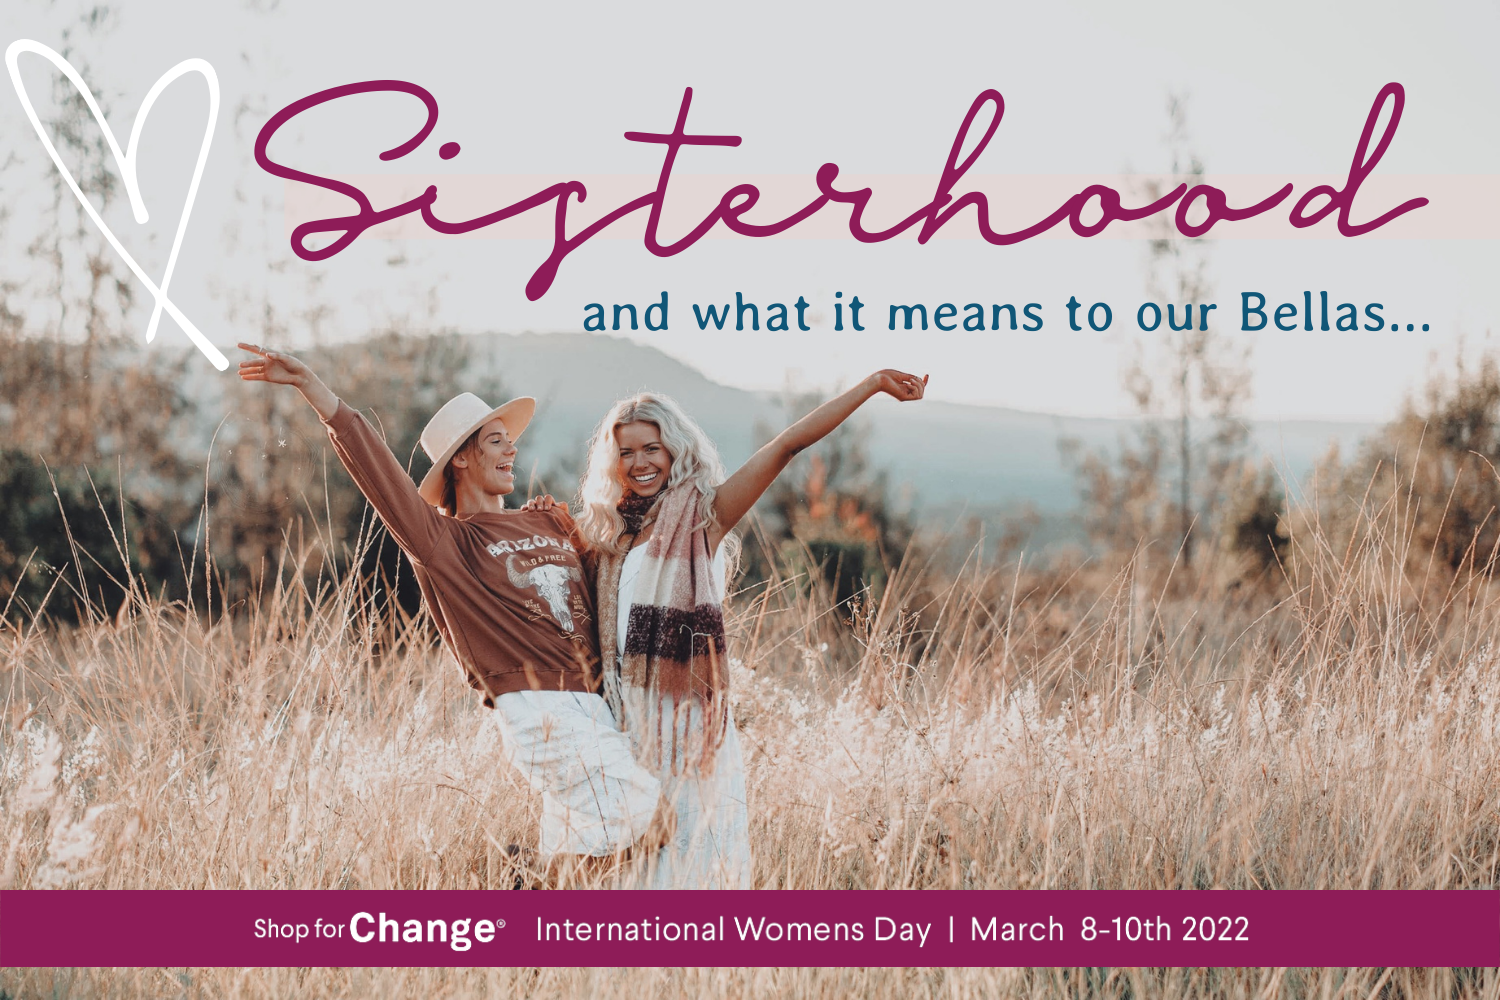 Sisterhood is Our Superpower!